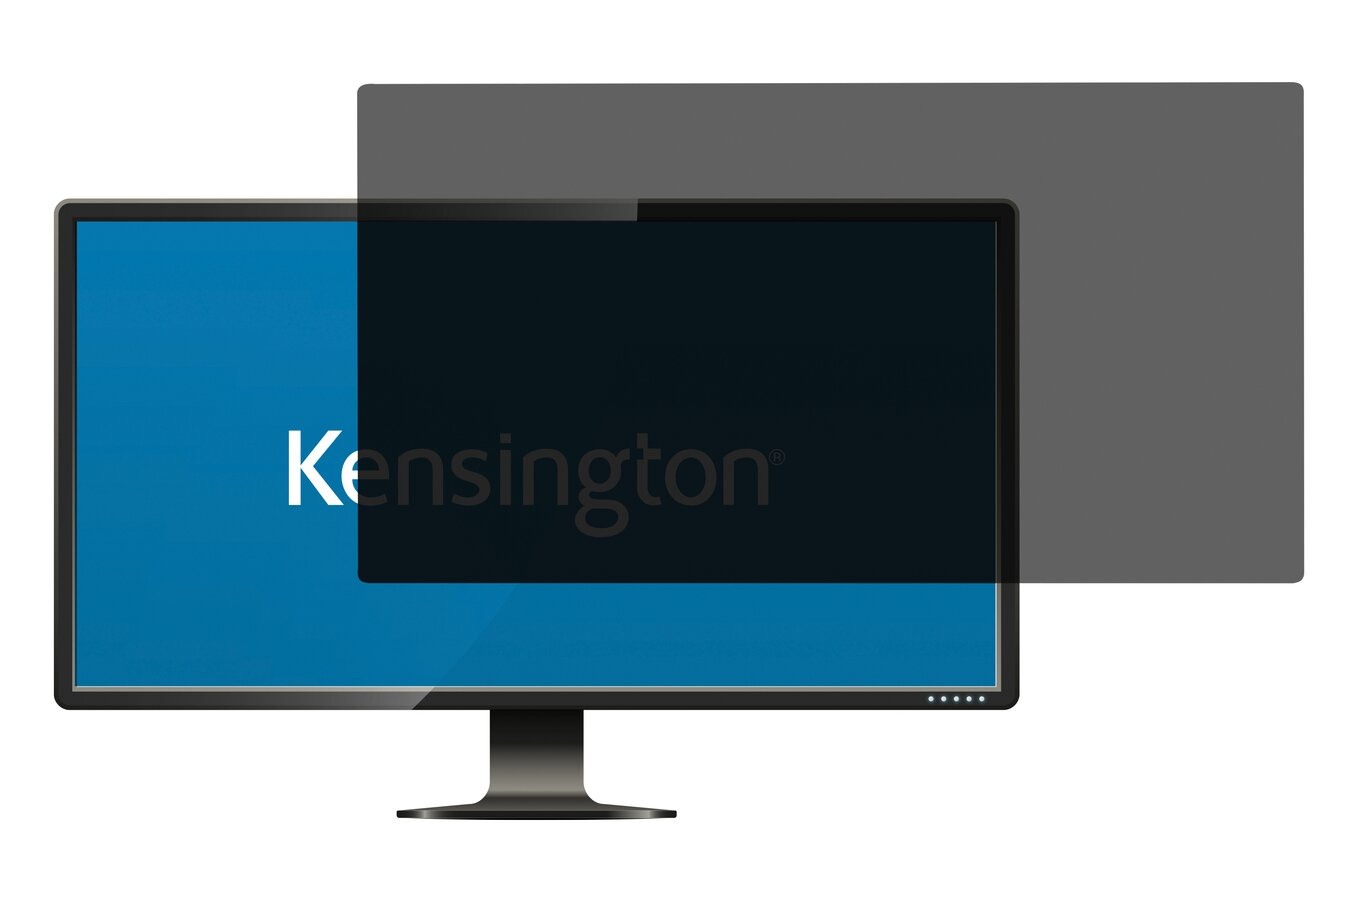 Kensington Blickschutzfilter für Bildschirme - 2-Wege - entfernbar - 60.4 cm wide (23,8 Zoll Breitbild)